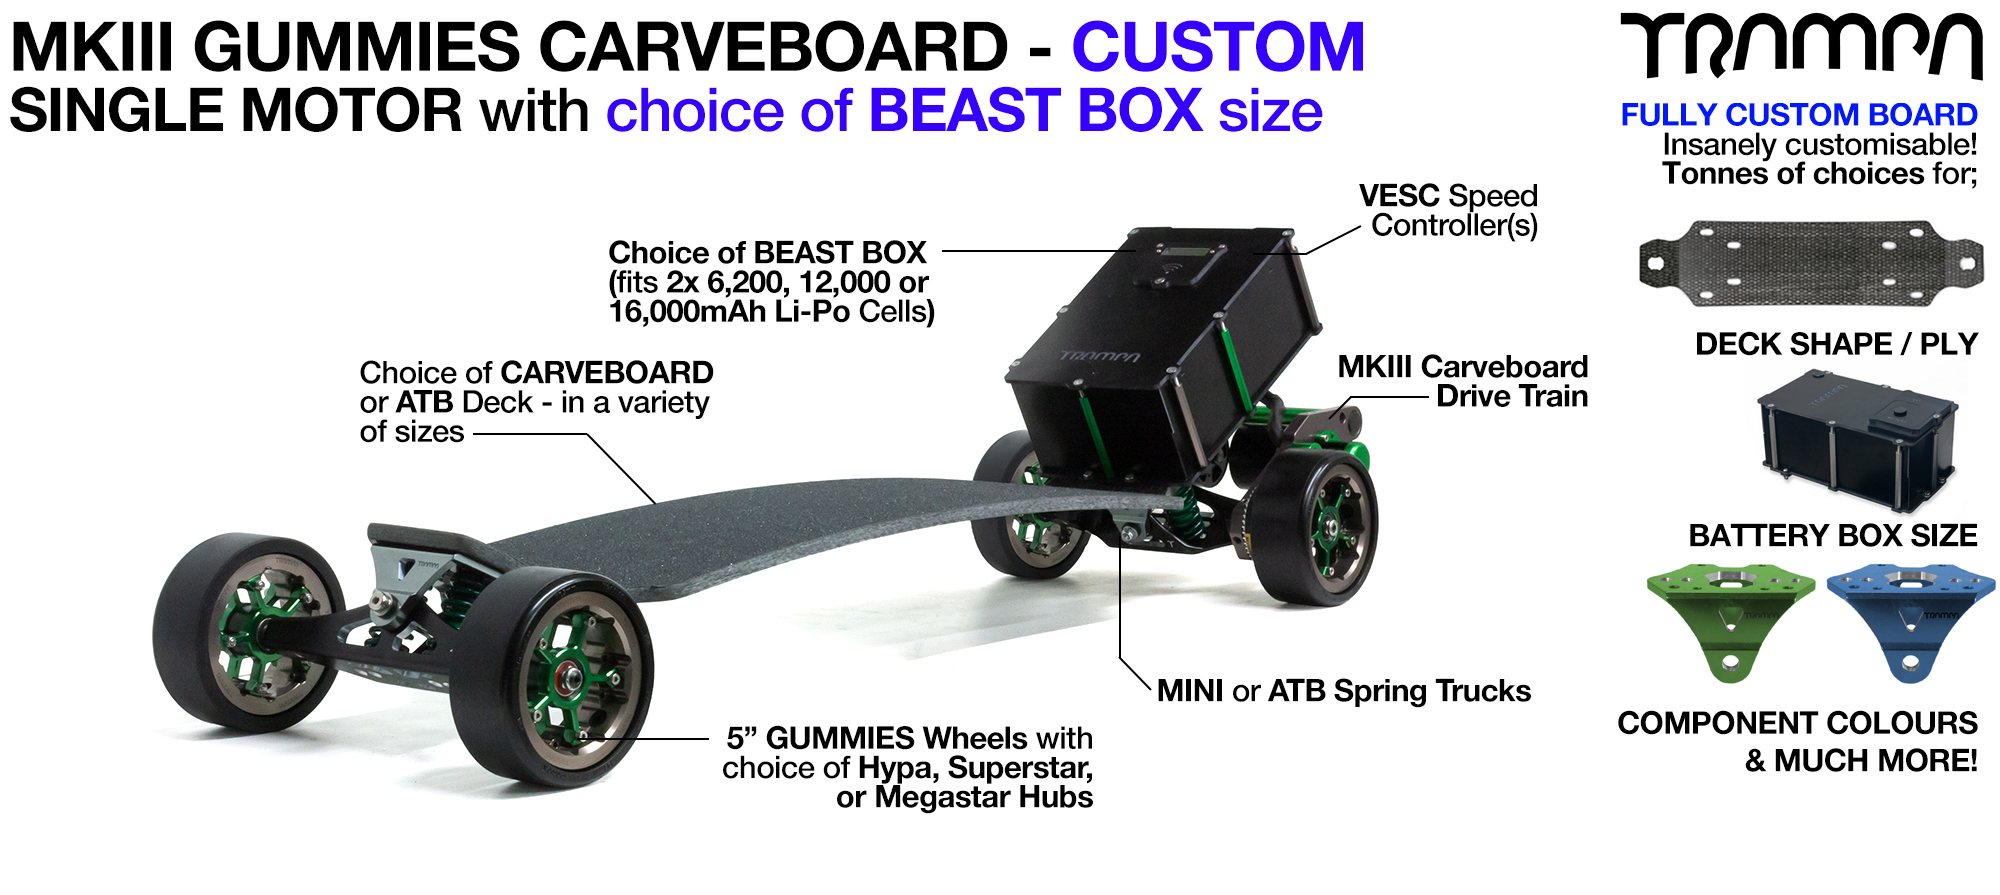 TRAMPA's MkIII Electric GUMMIES Carveboard - uses Mini Spring Trucks with MkIII Carve board Motor Mount's Custom TRAMPA hubs & 125mm GUMMIES longboard Tyres - SINGLE Motor CUSTOM